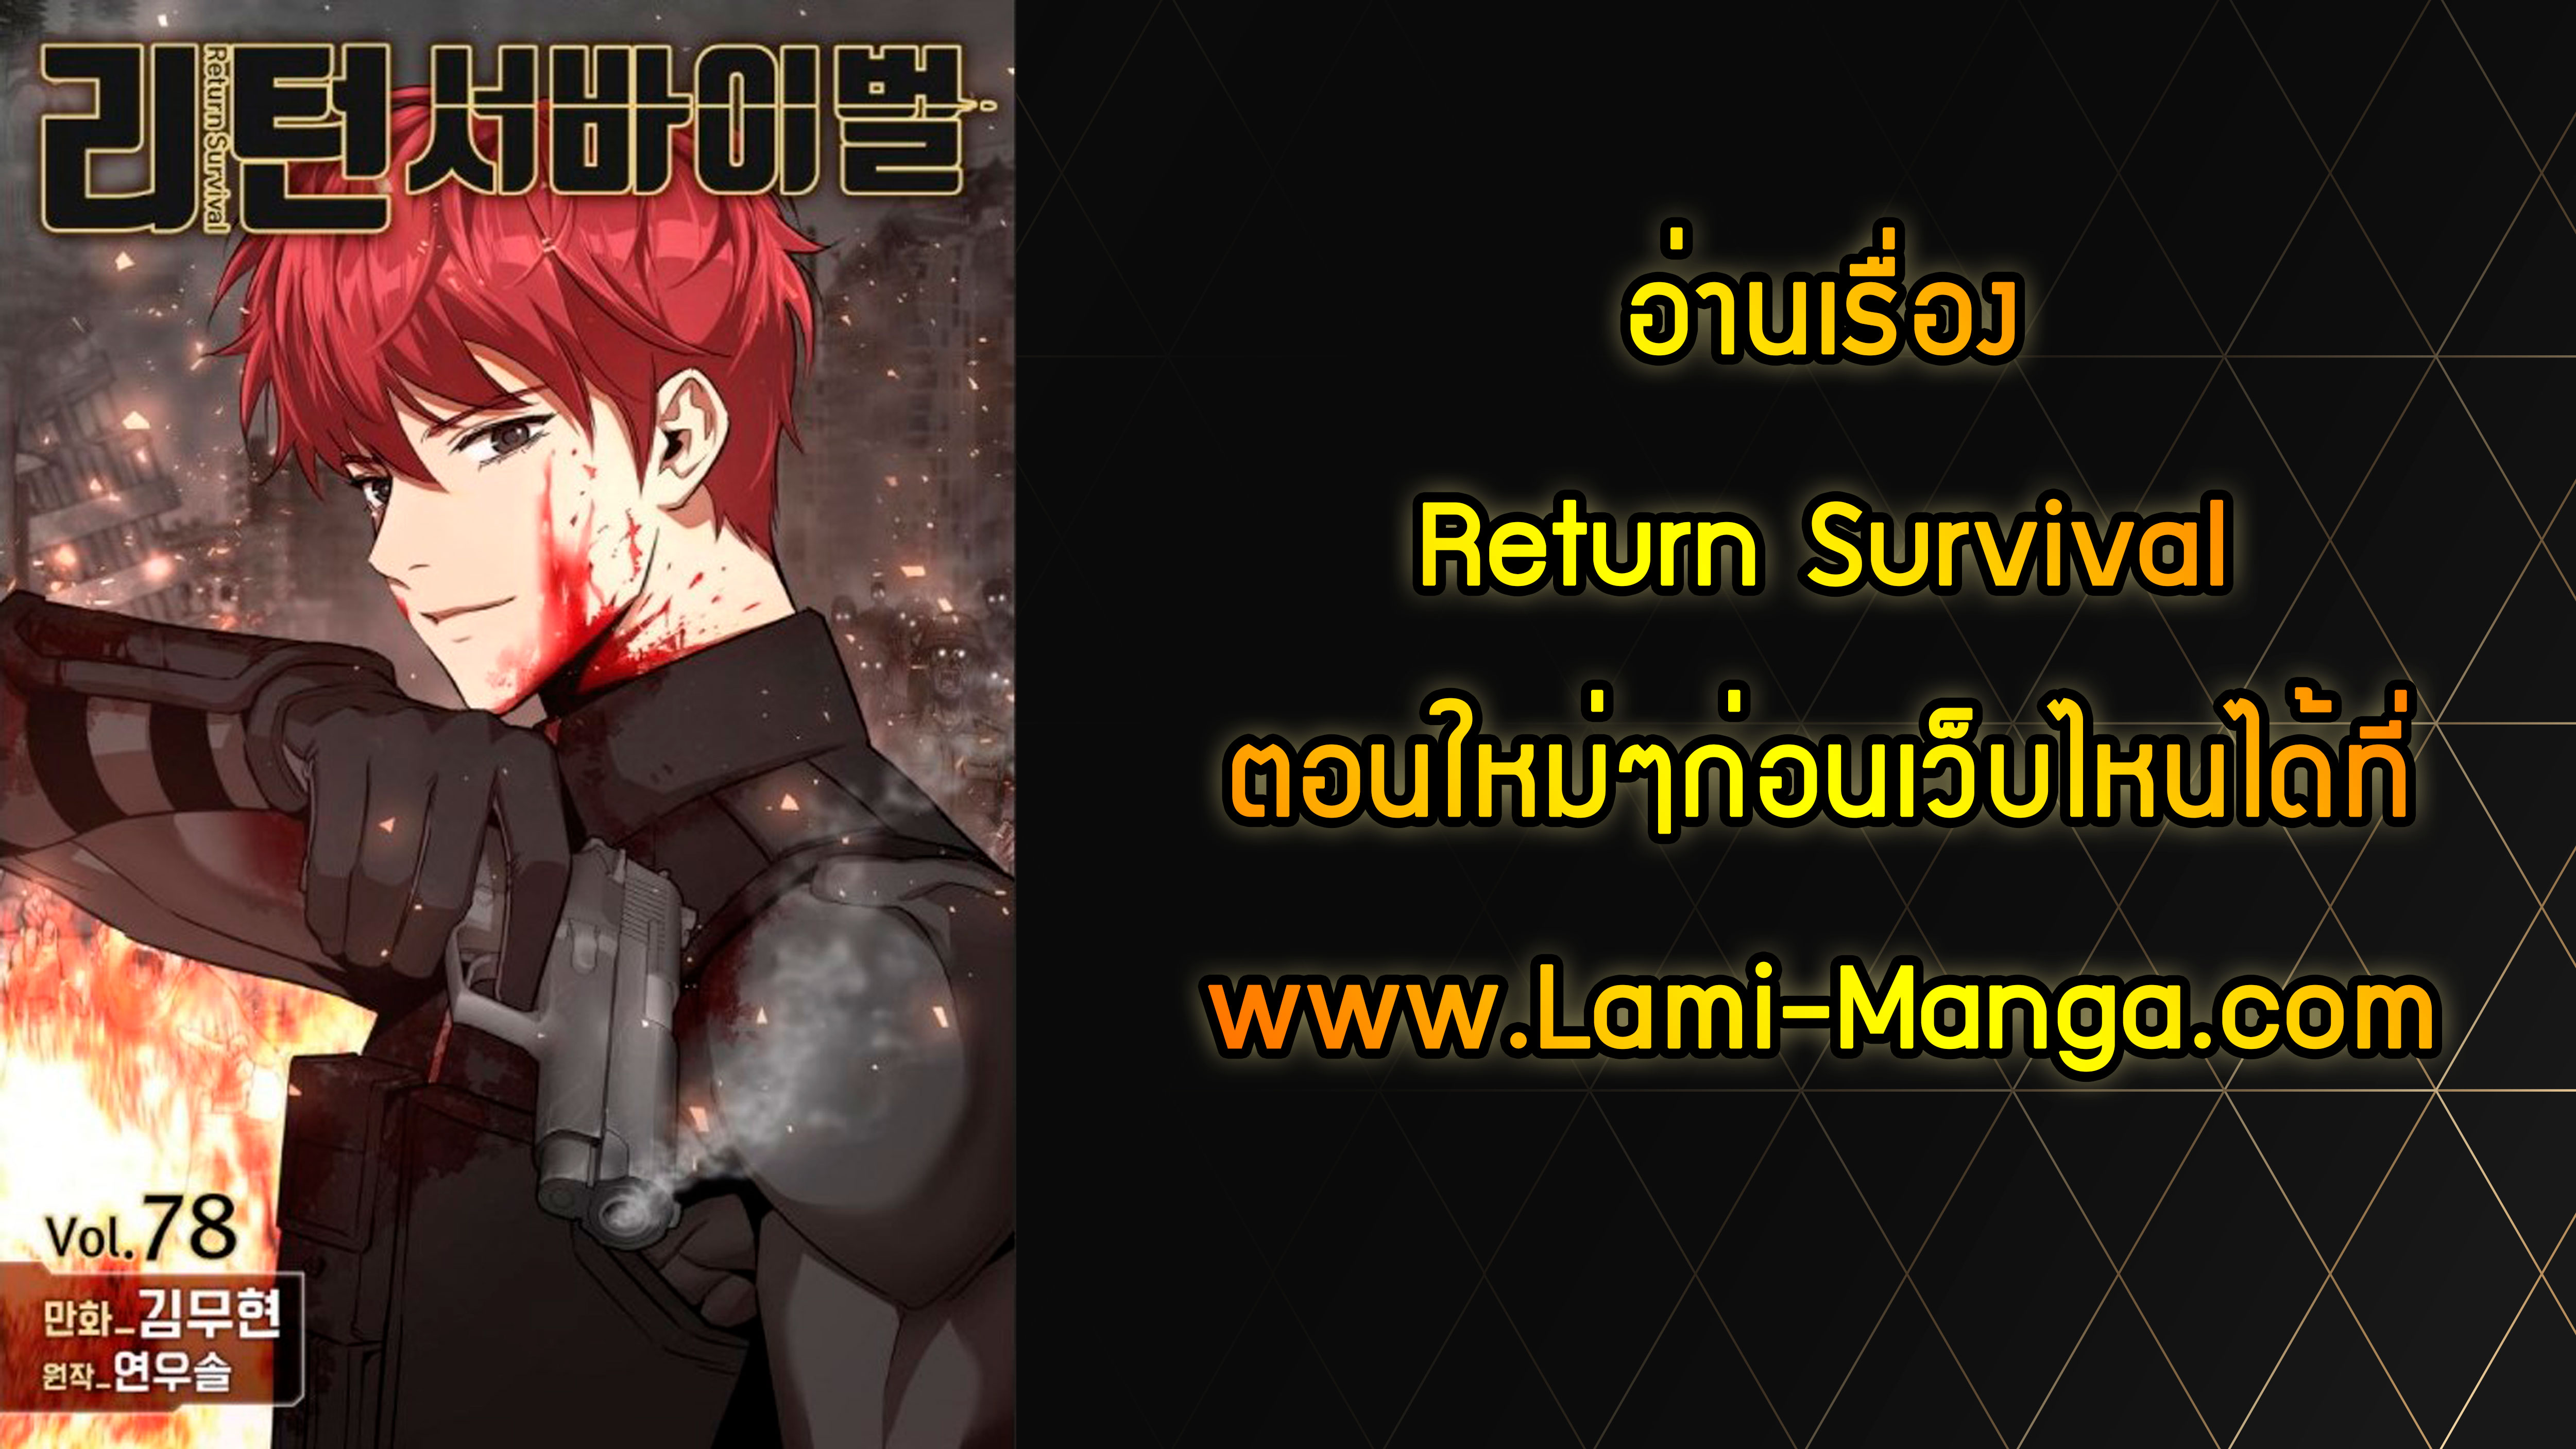 Return Survival 35 5